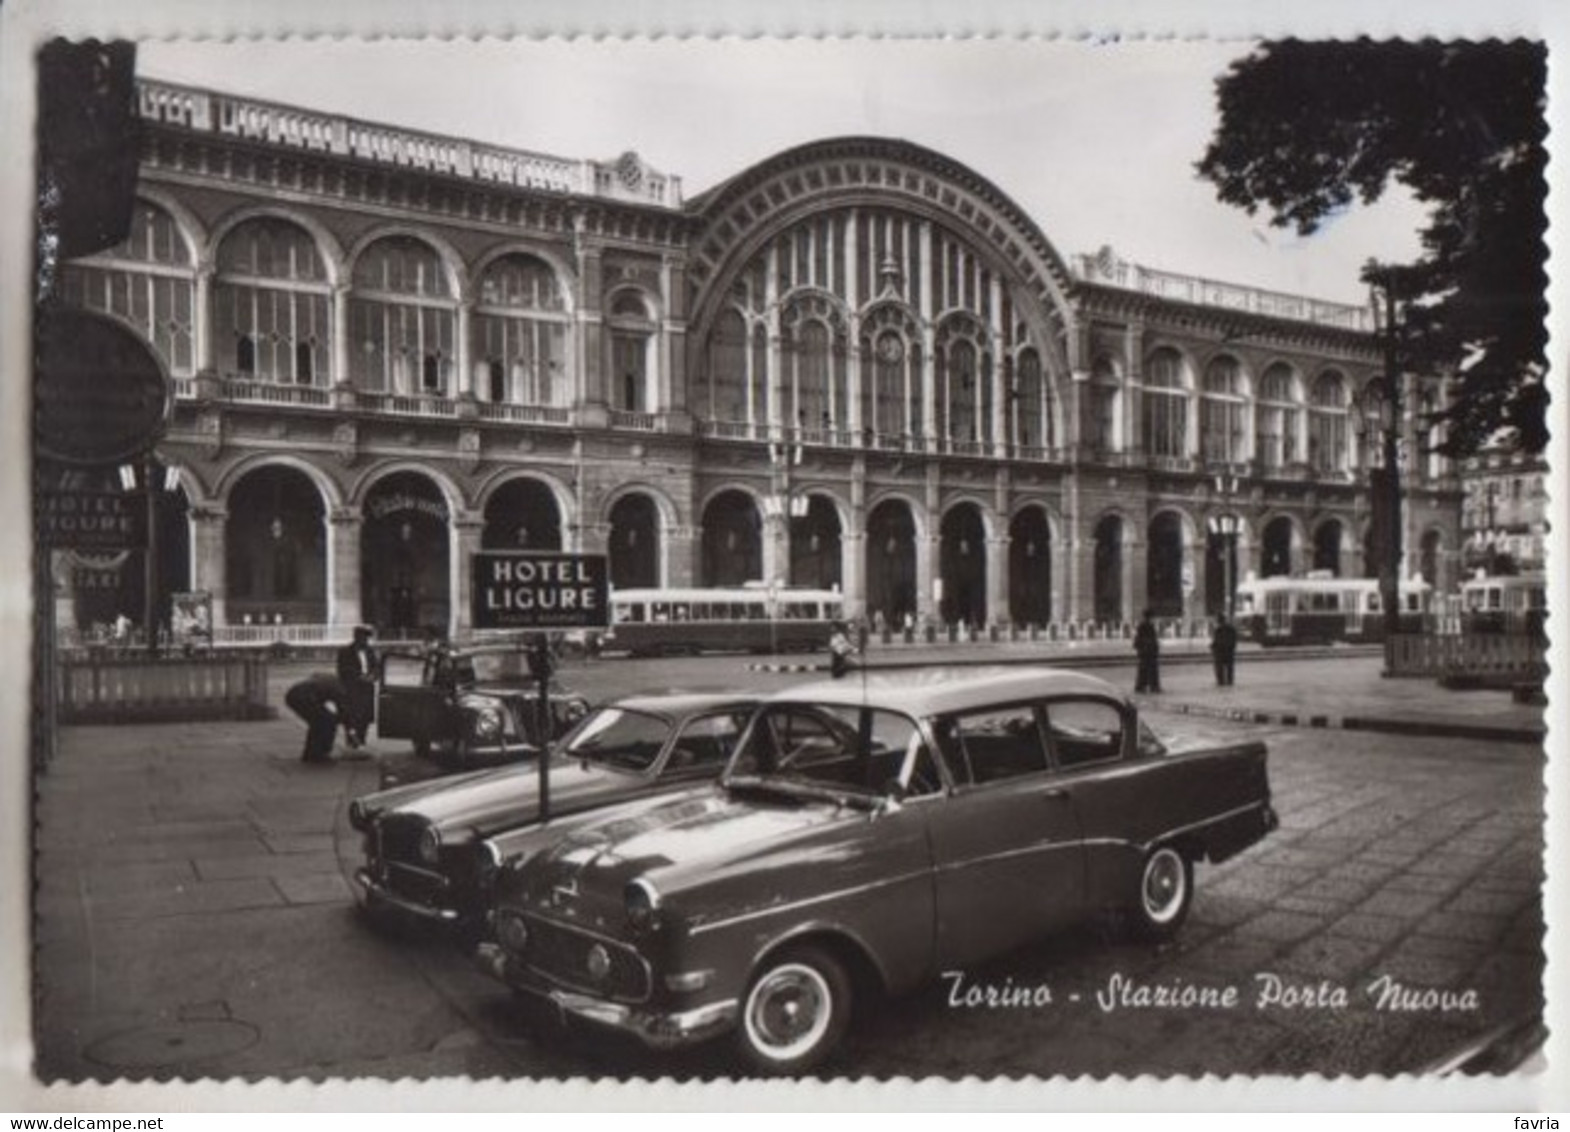 Torino, Stazione Porta Nuova   - Cartolina Viaggiata  20-6-1963 ( Cart. 699) - Stazione Porta Nuova